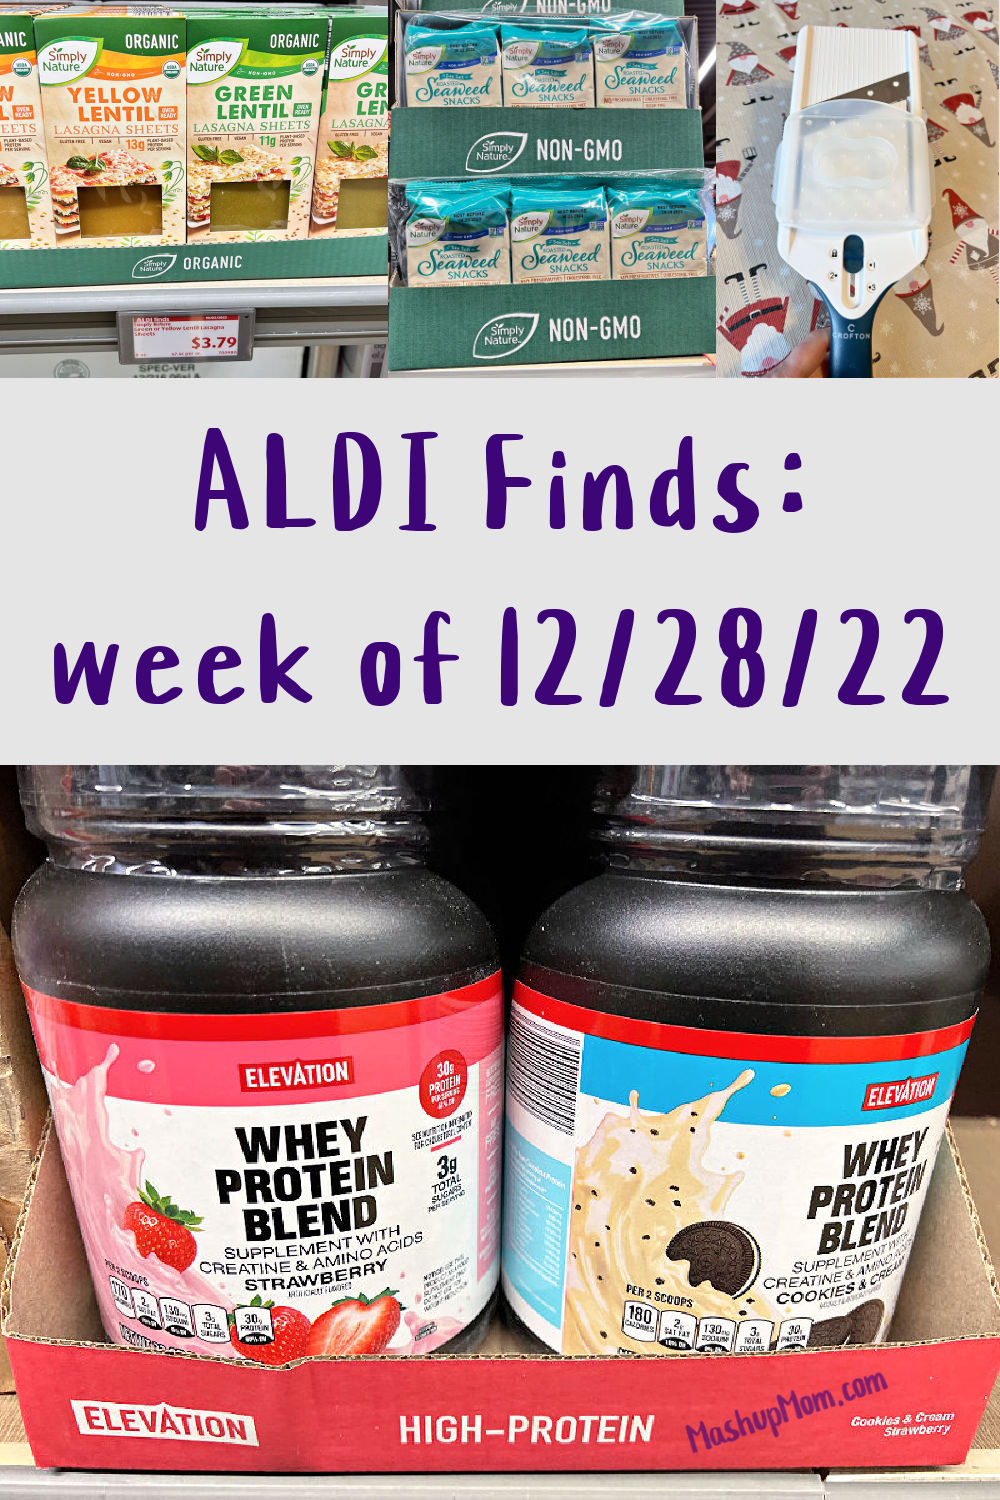 aldi finds week of 12/28/22